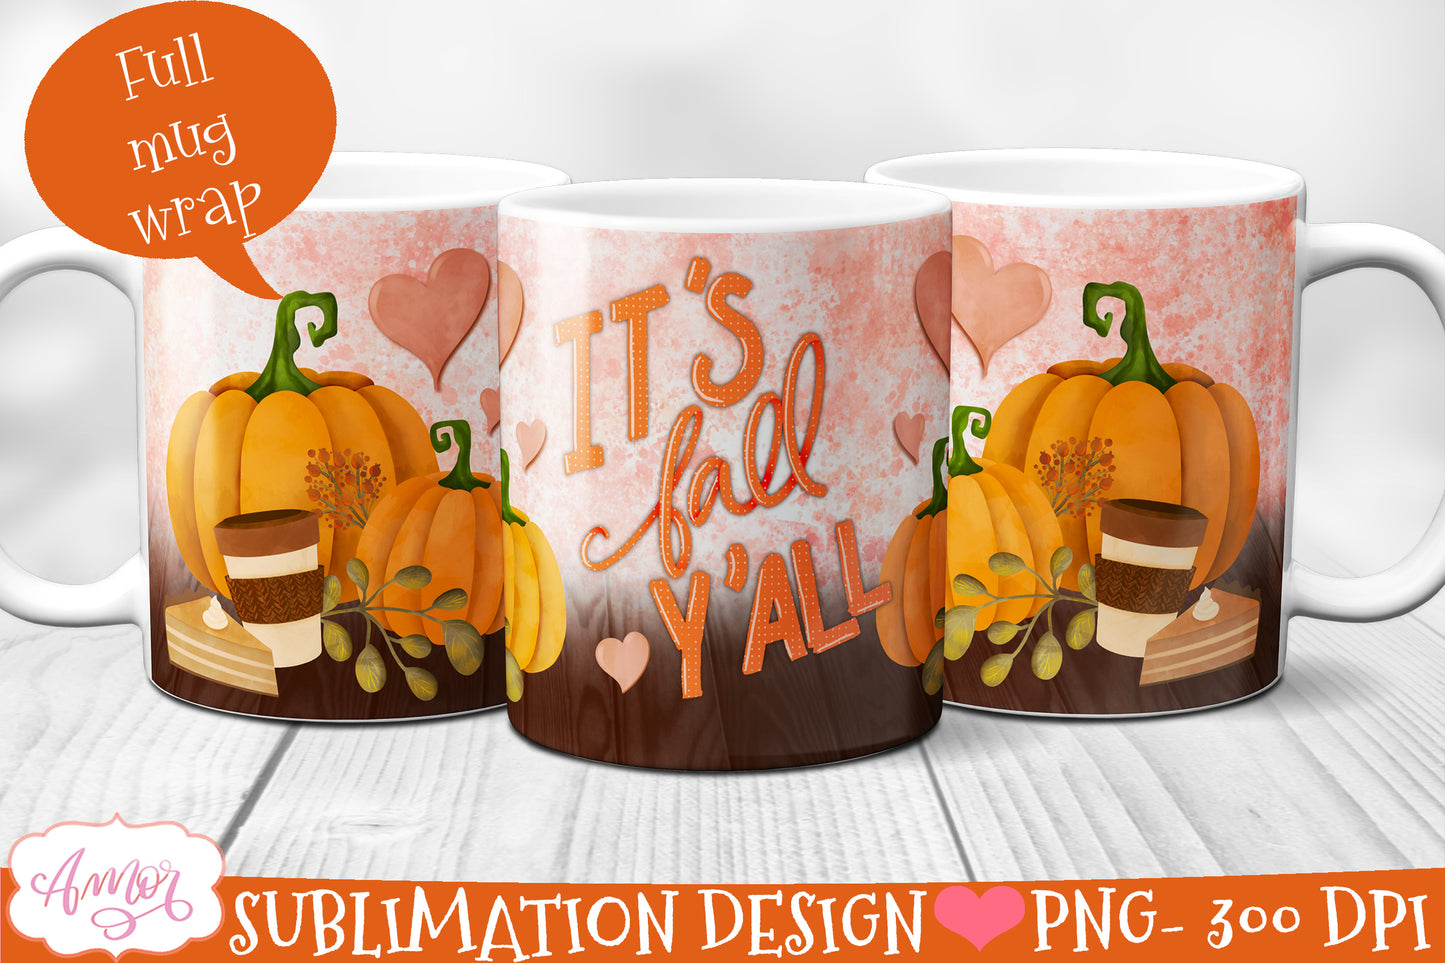 BUNDLE Fall Pumpkins Mug wrap PNG sublimation 11oz and 15oz